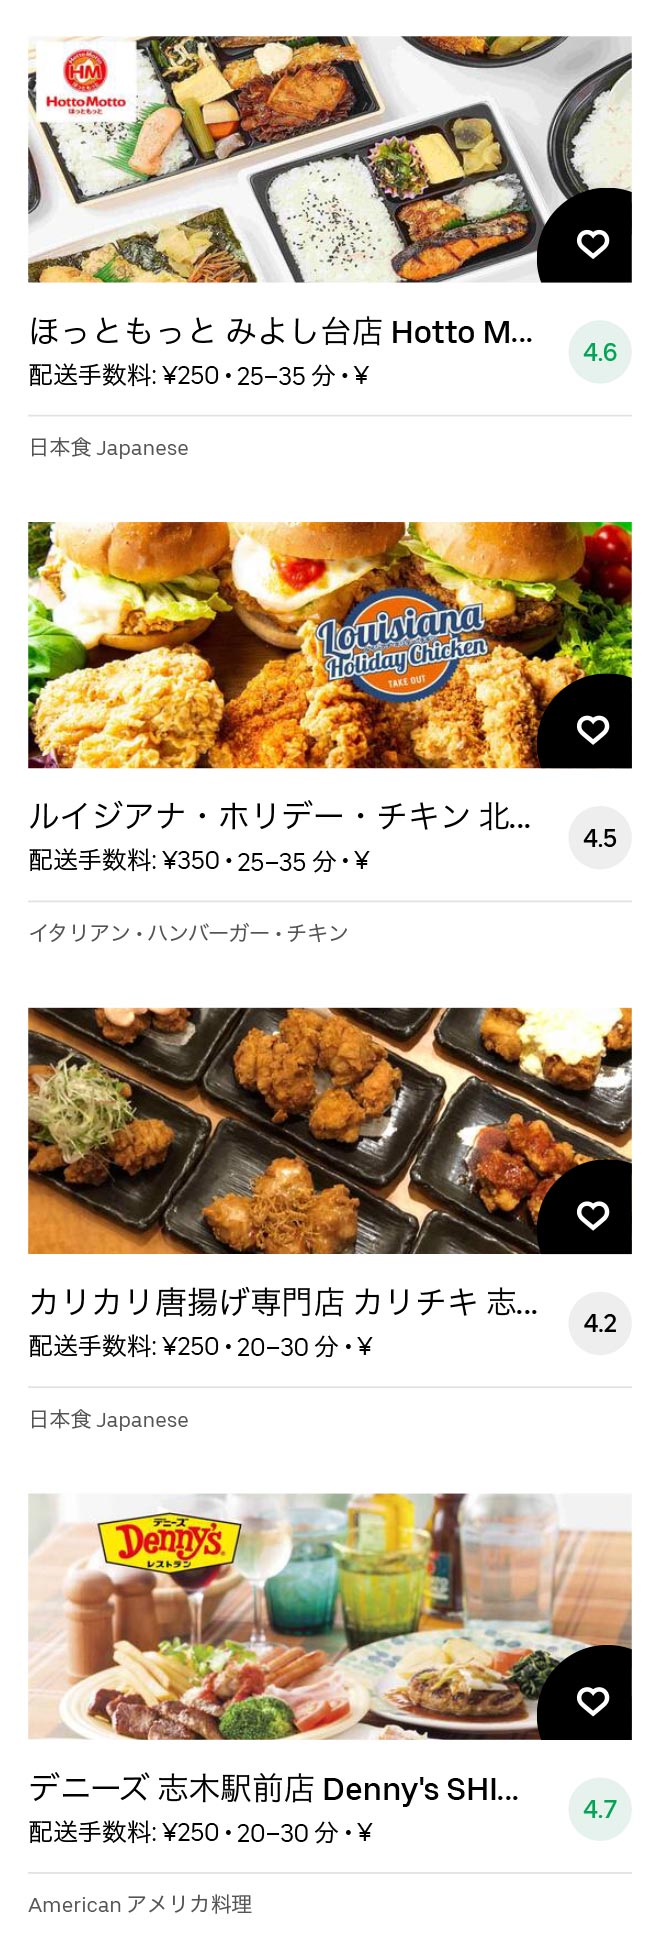 Yanasegawa menu 2011 05